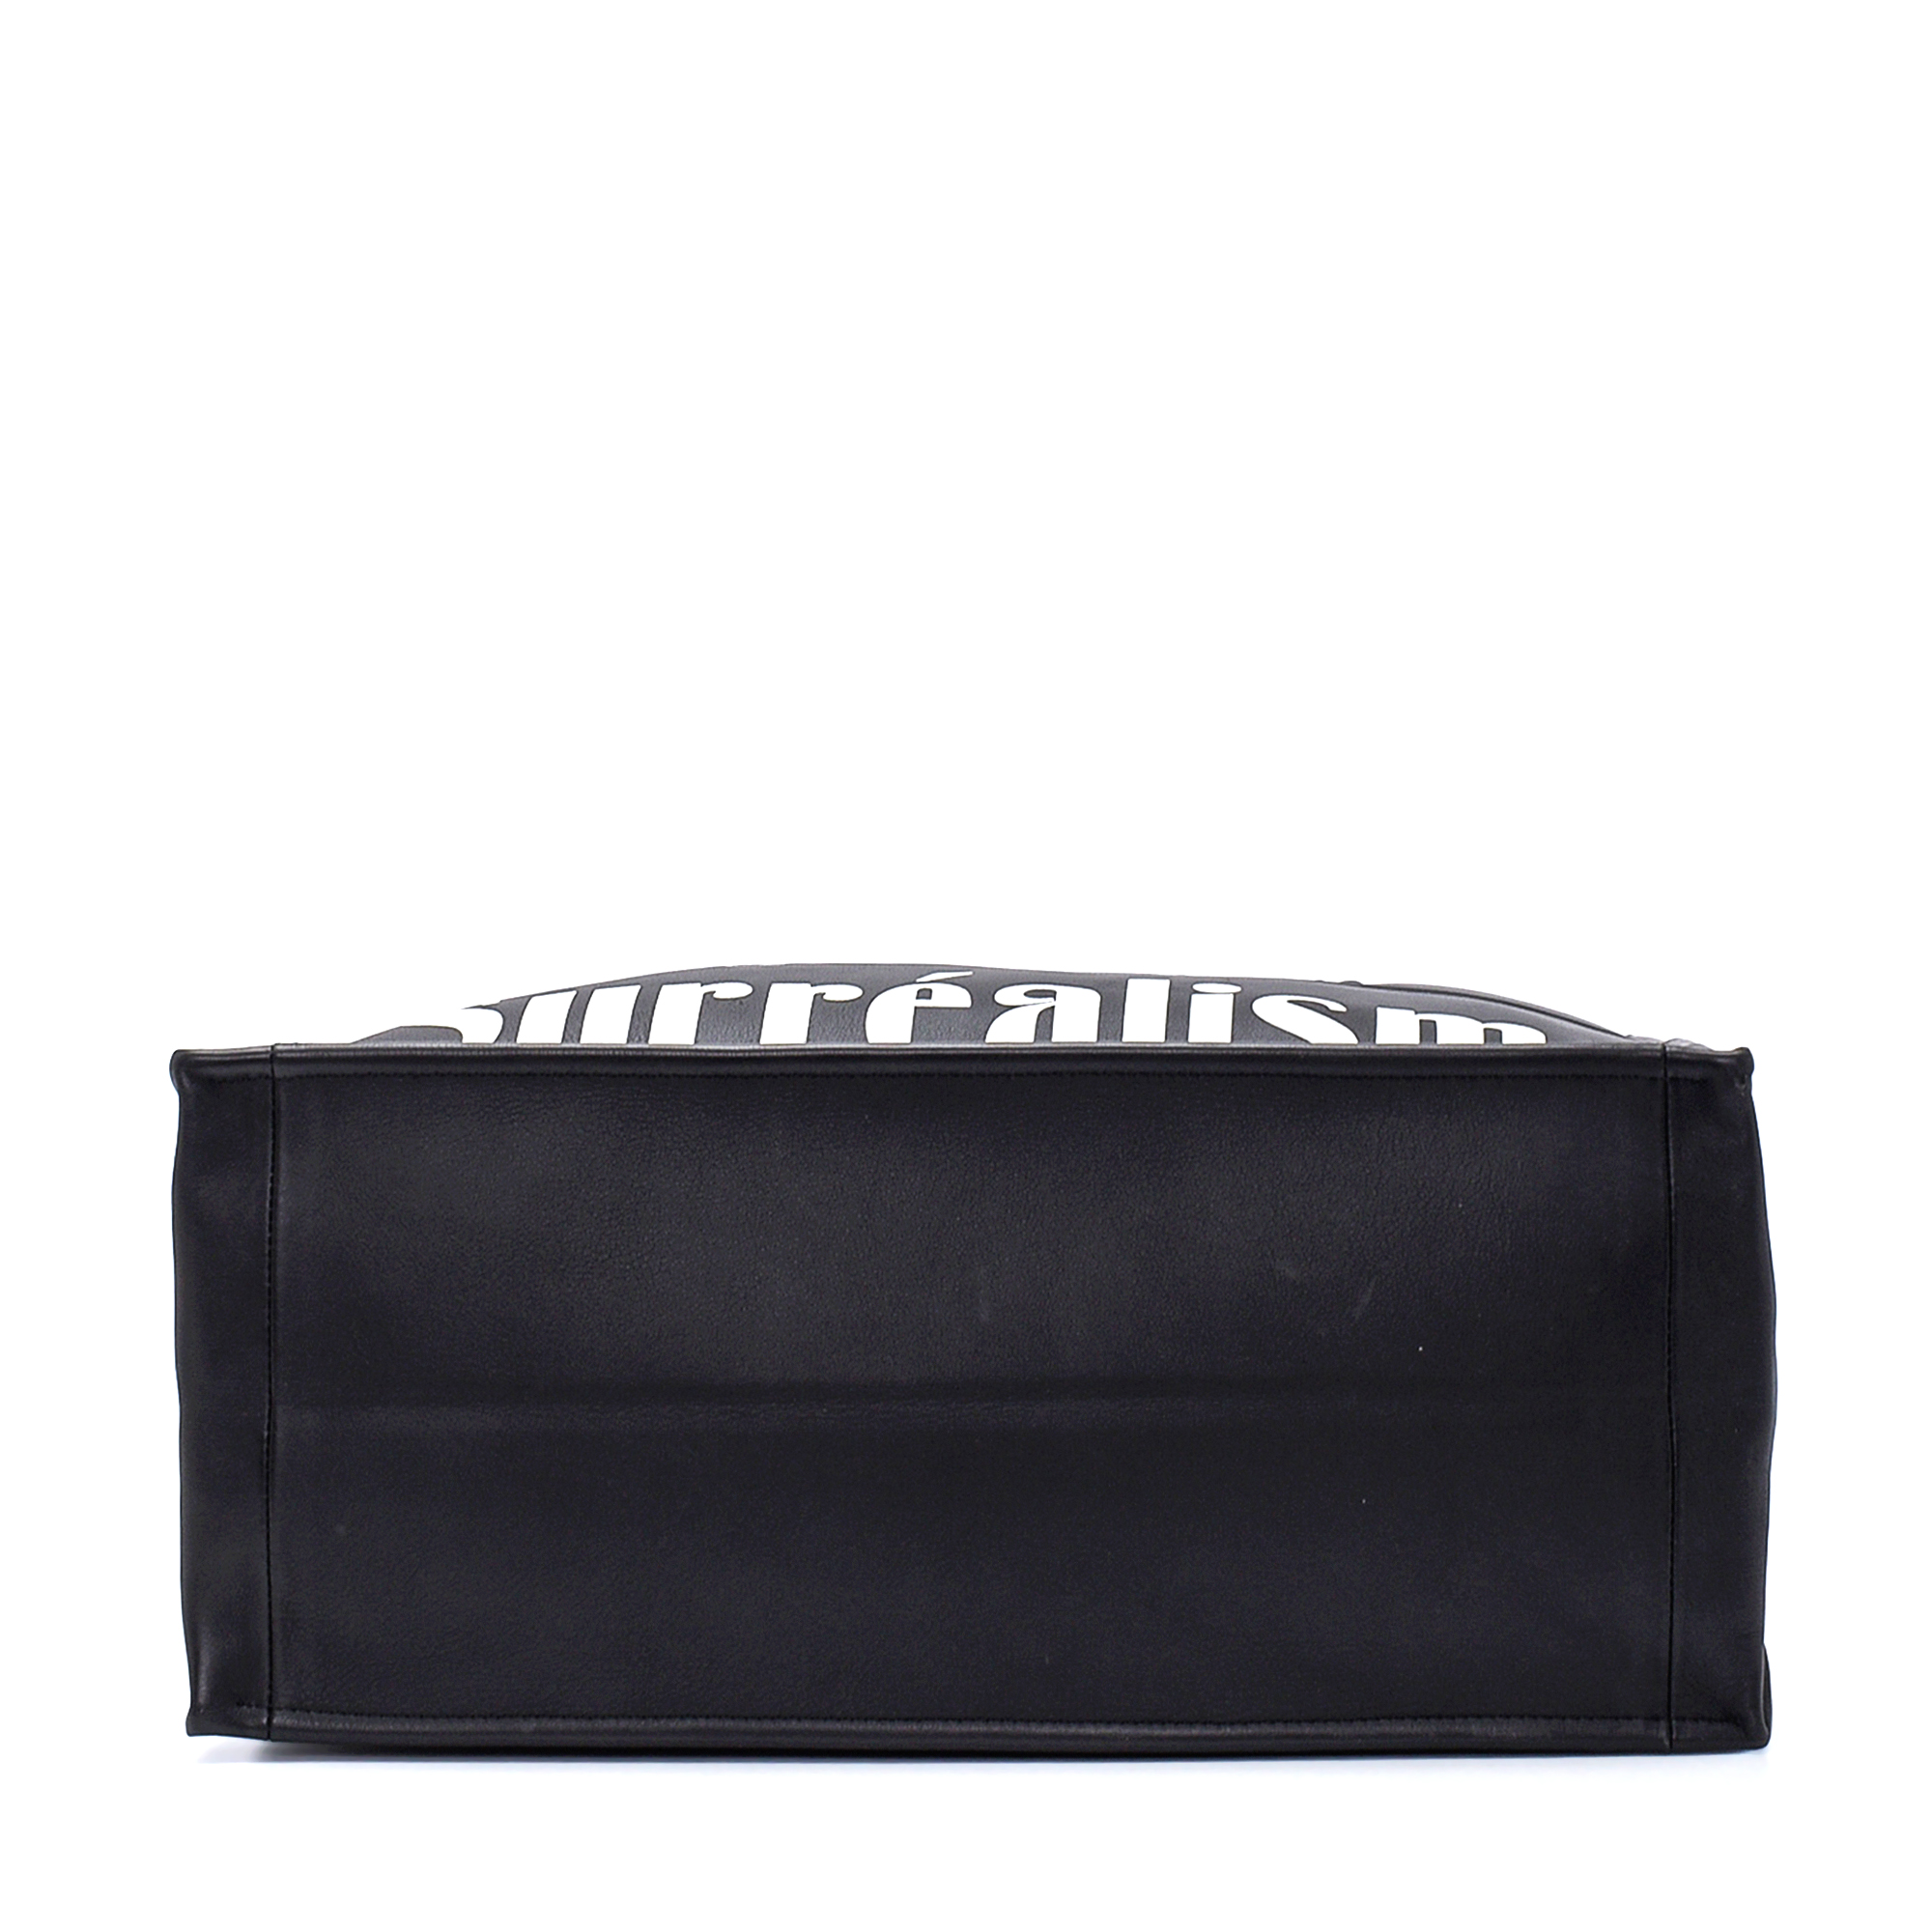 Christian Dior - Black Leather Surrealism Book Tote Bag